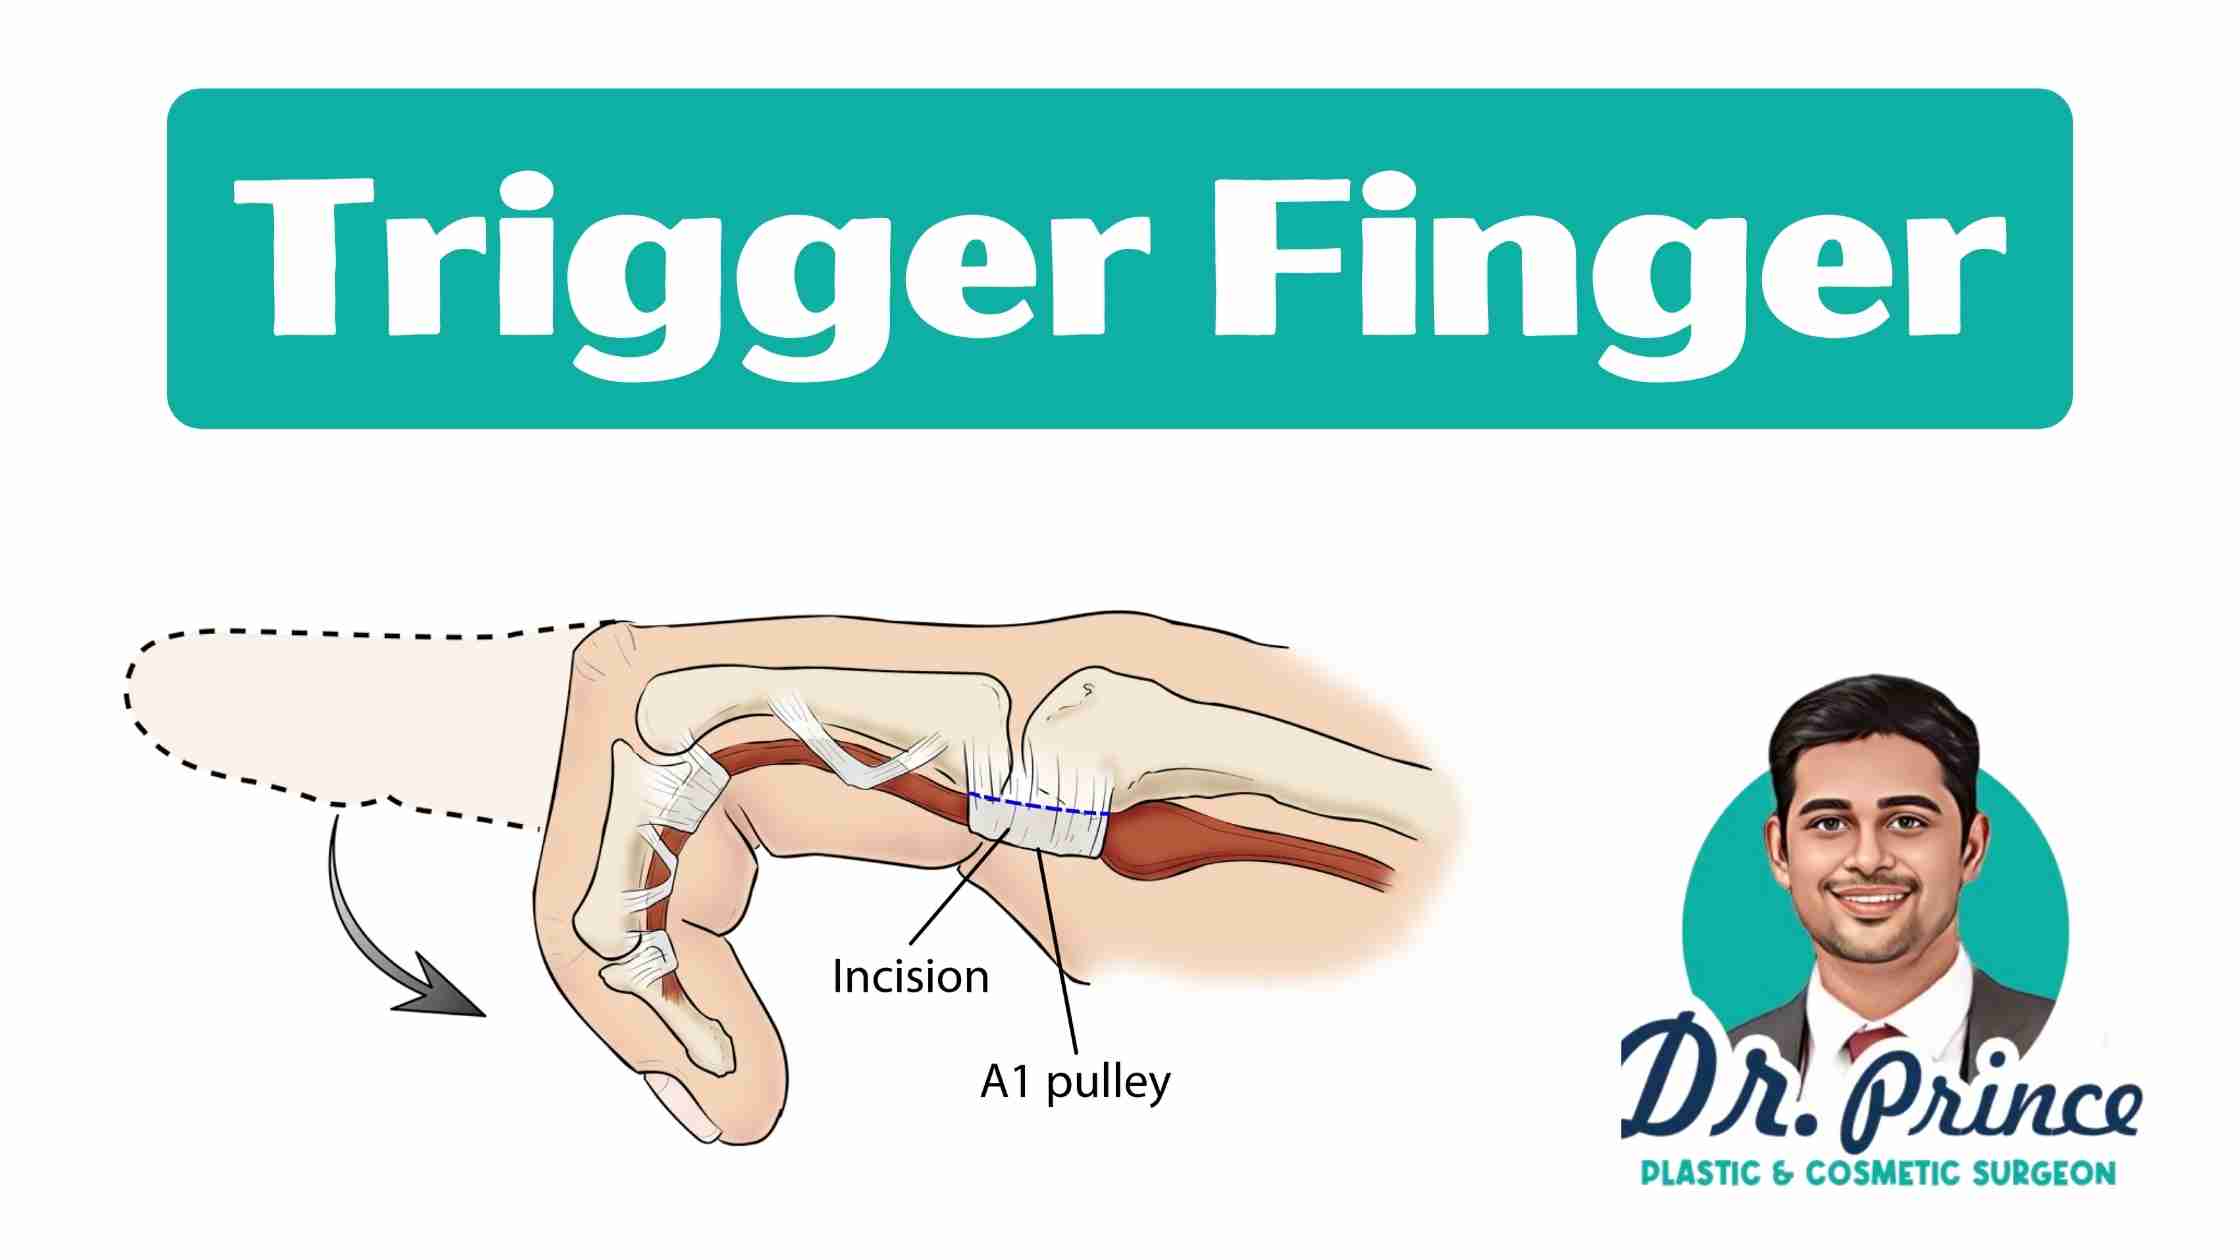 Illustration of a Hand Demonstrating Trigger Finger Symptoms - Dr. Prince's Expertise at Your Service